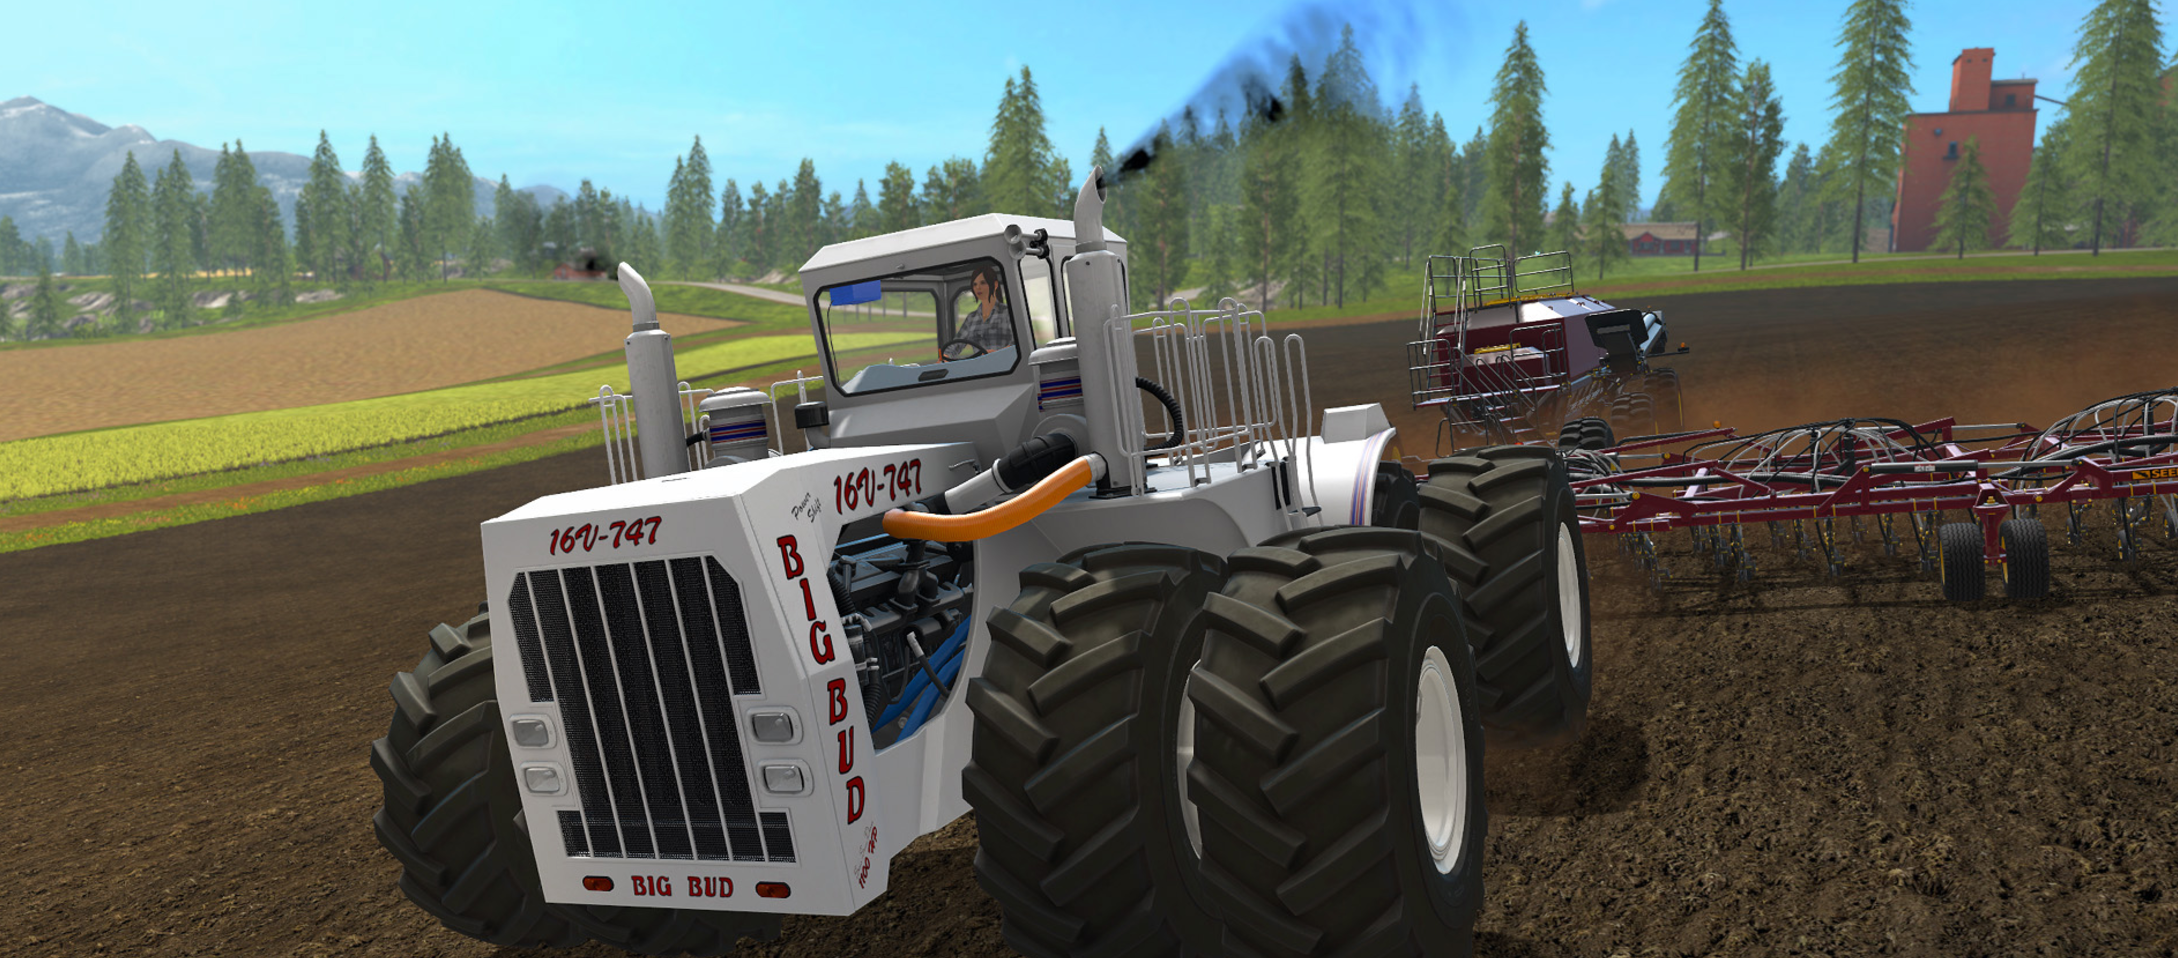 vehicles farming simulator 19